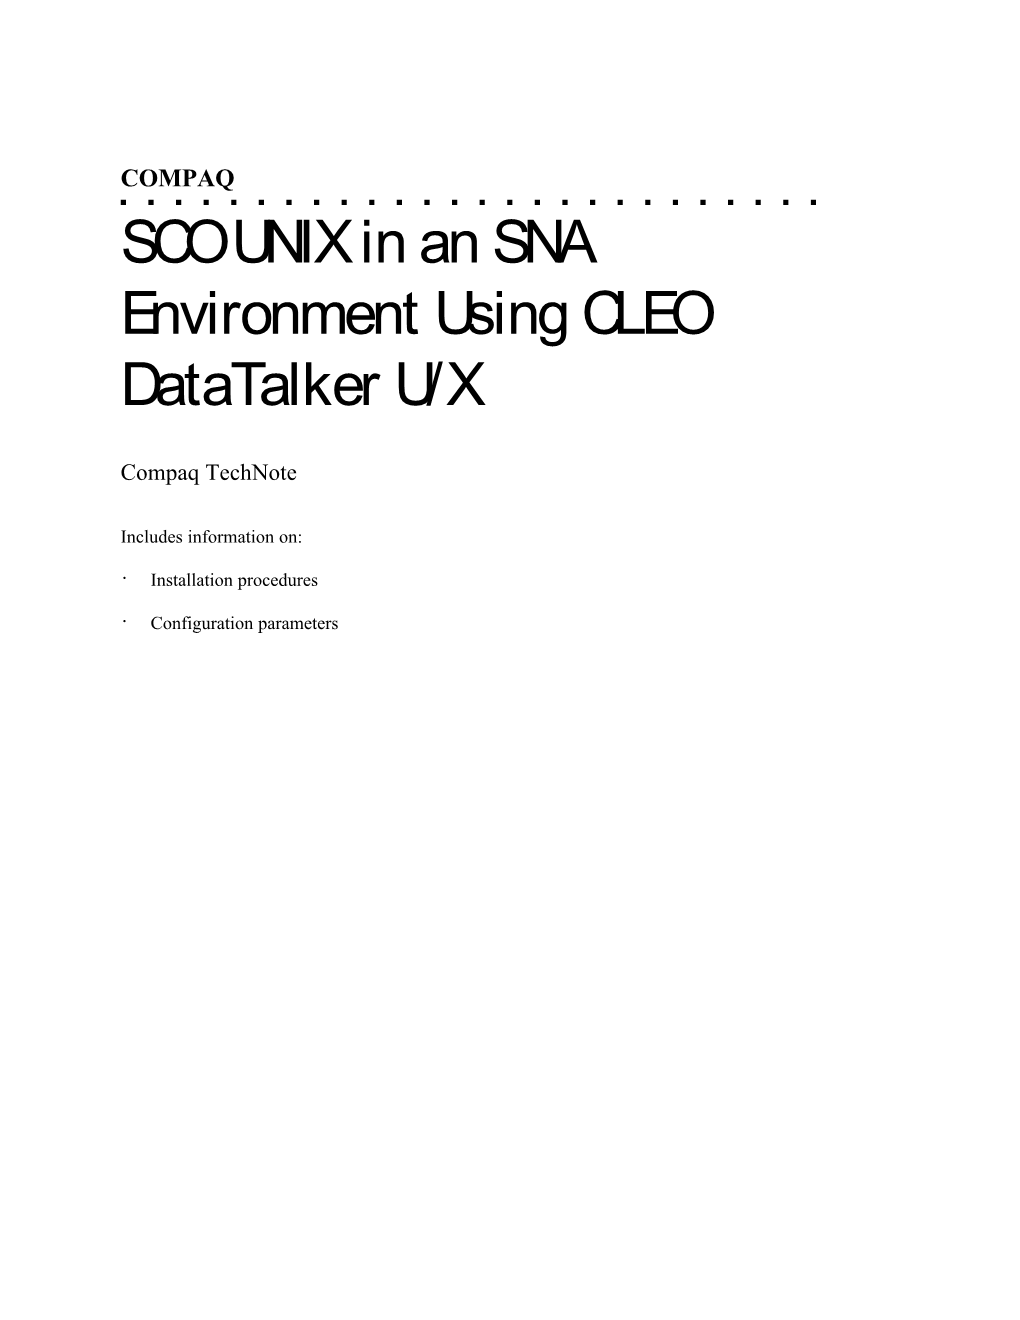 SCO UNIX in an SNA Environment Using CLEO Datatalker U/X